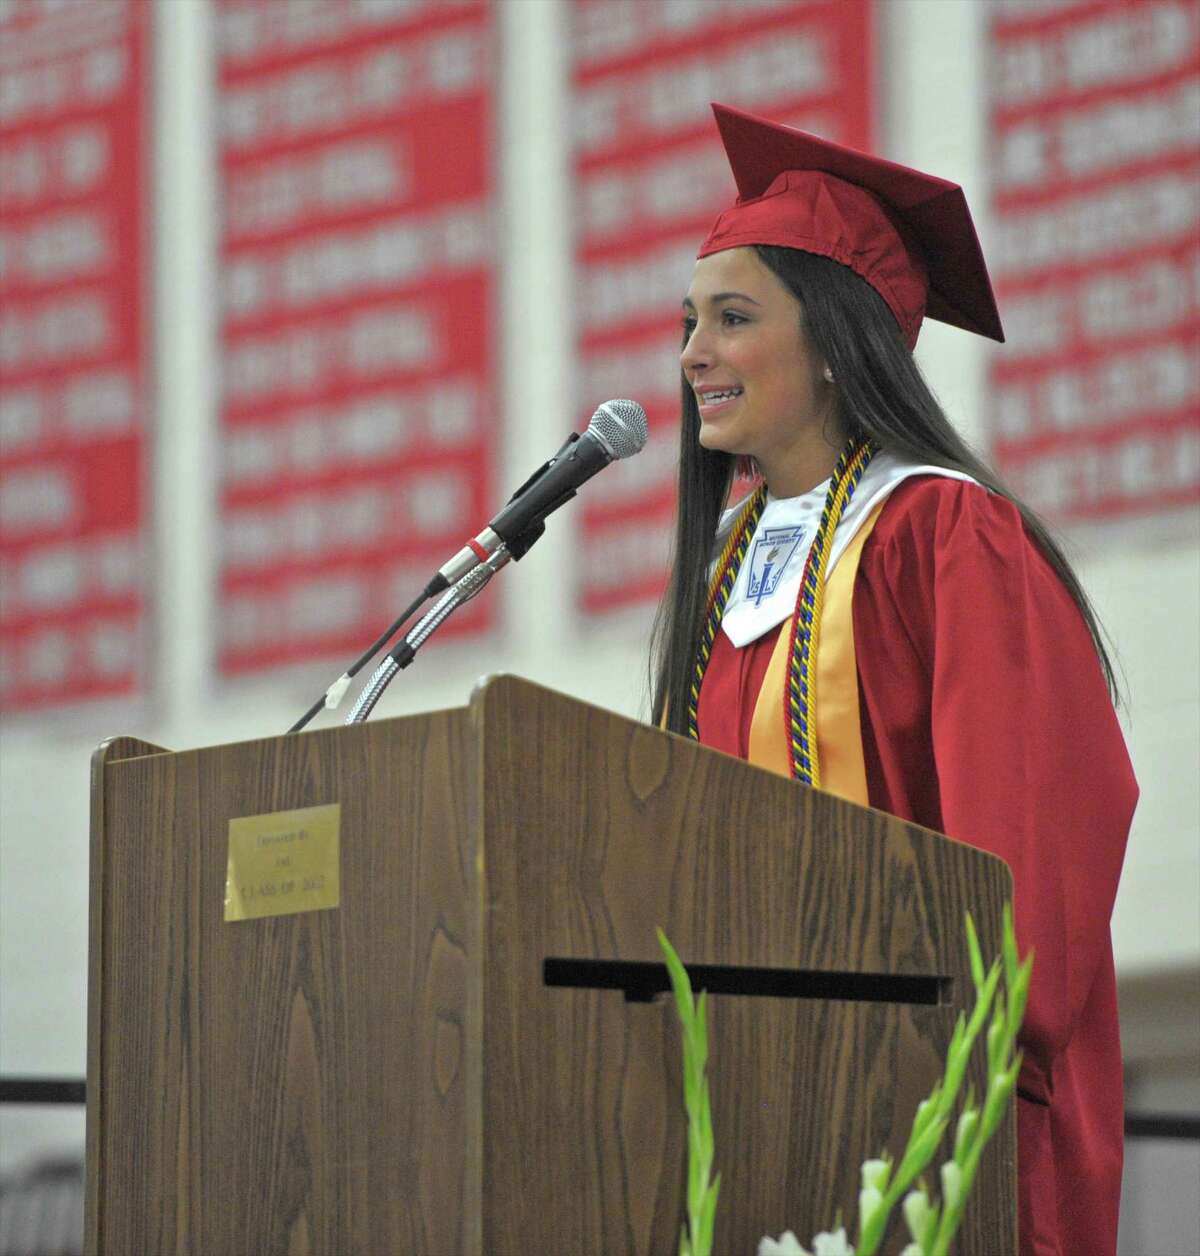 Joanna Rizza was the Salutatorian for the 2015 Pomperaug Regional High School Graduation Program, on Thursday night, June 18, 2015 at Pomperaug High School, Southbury, Conn.